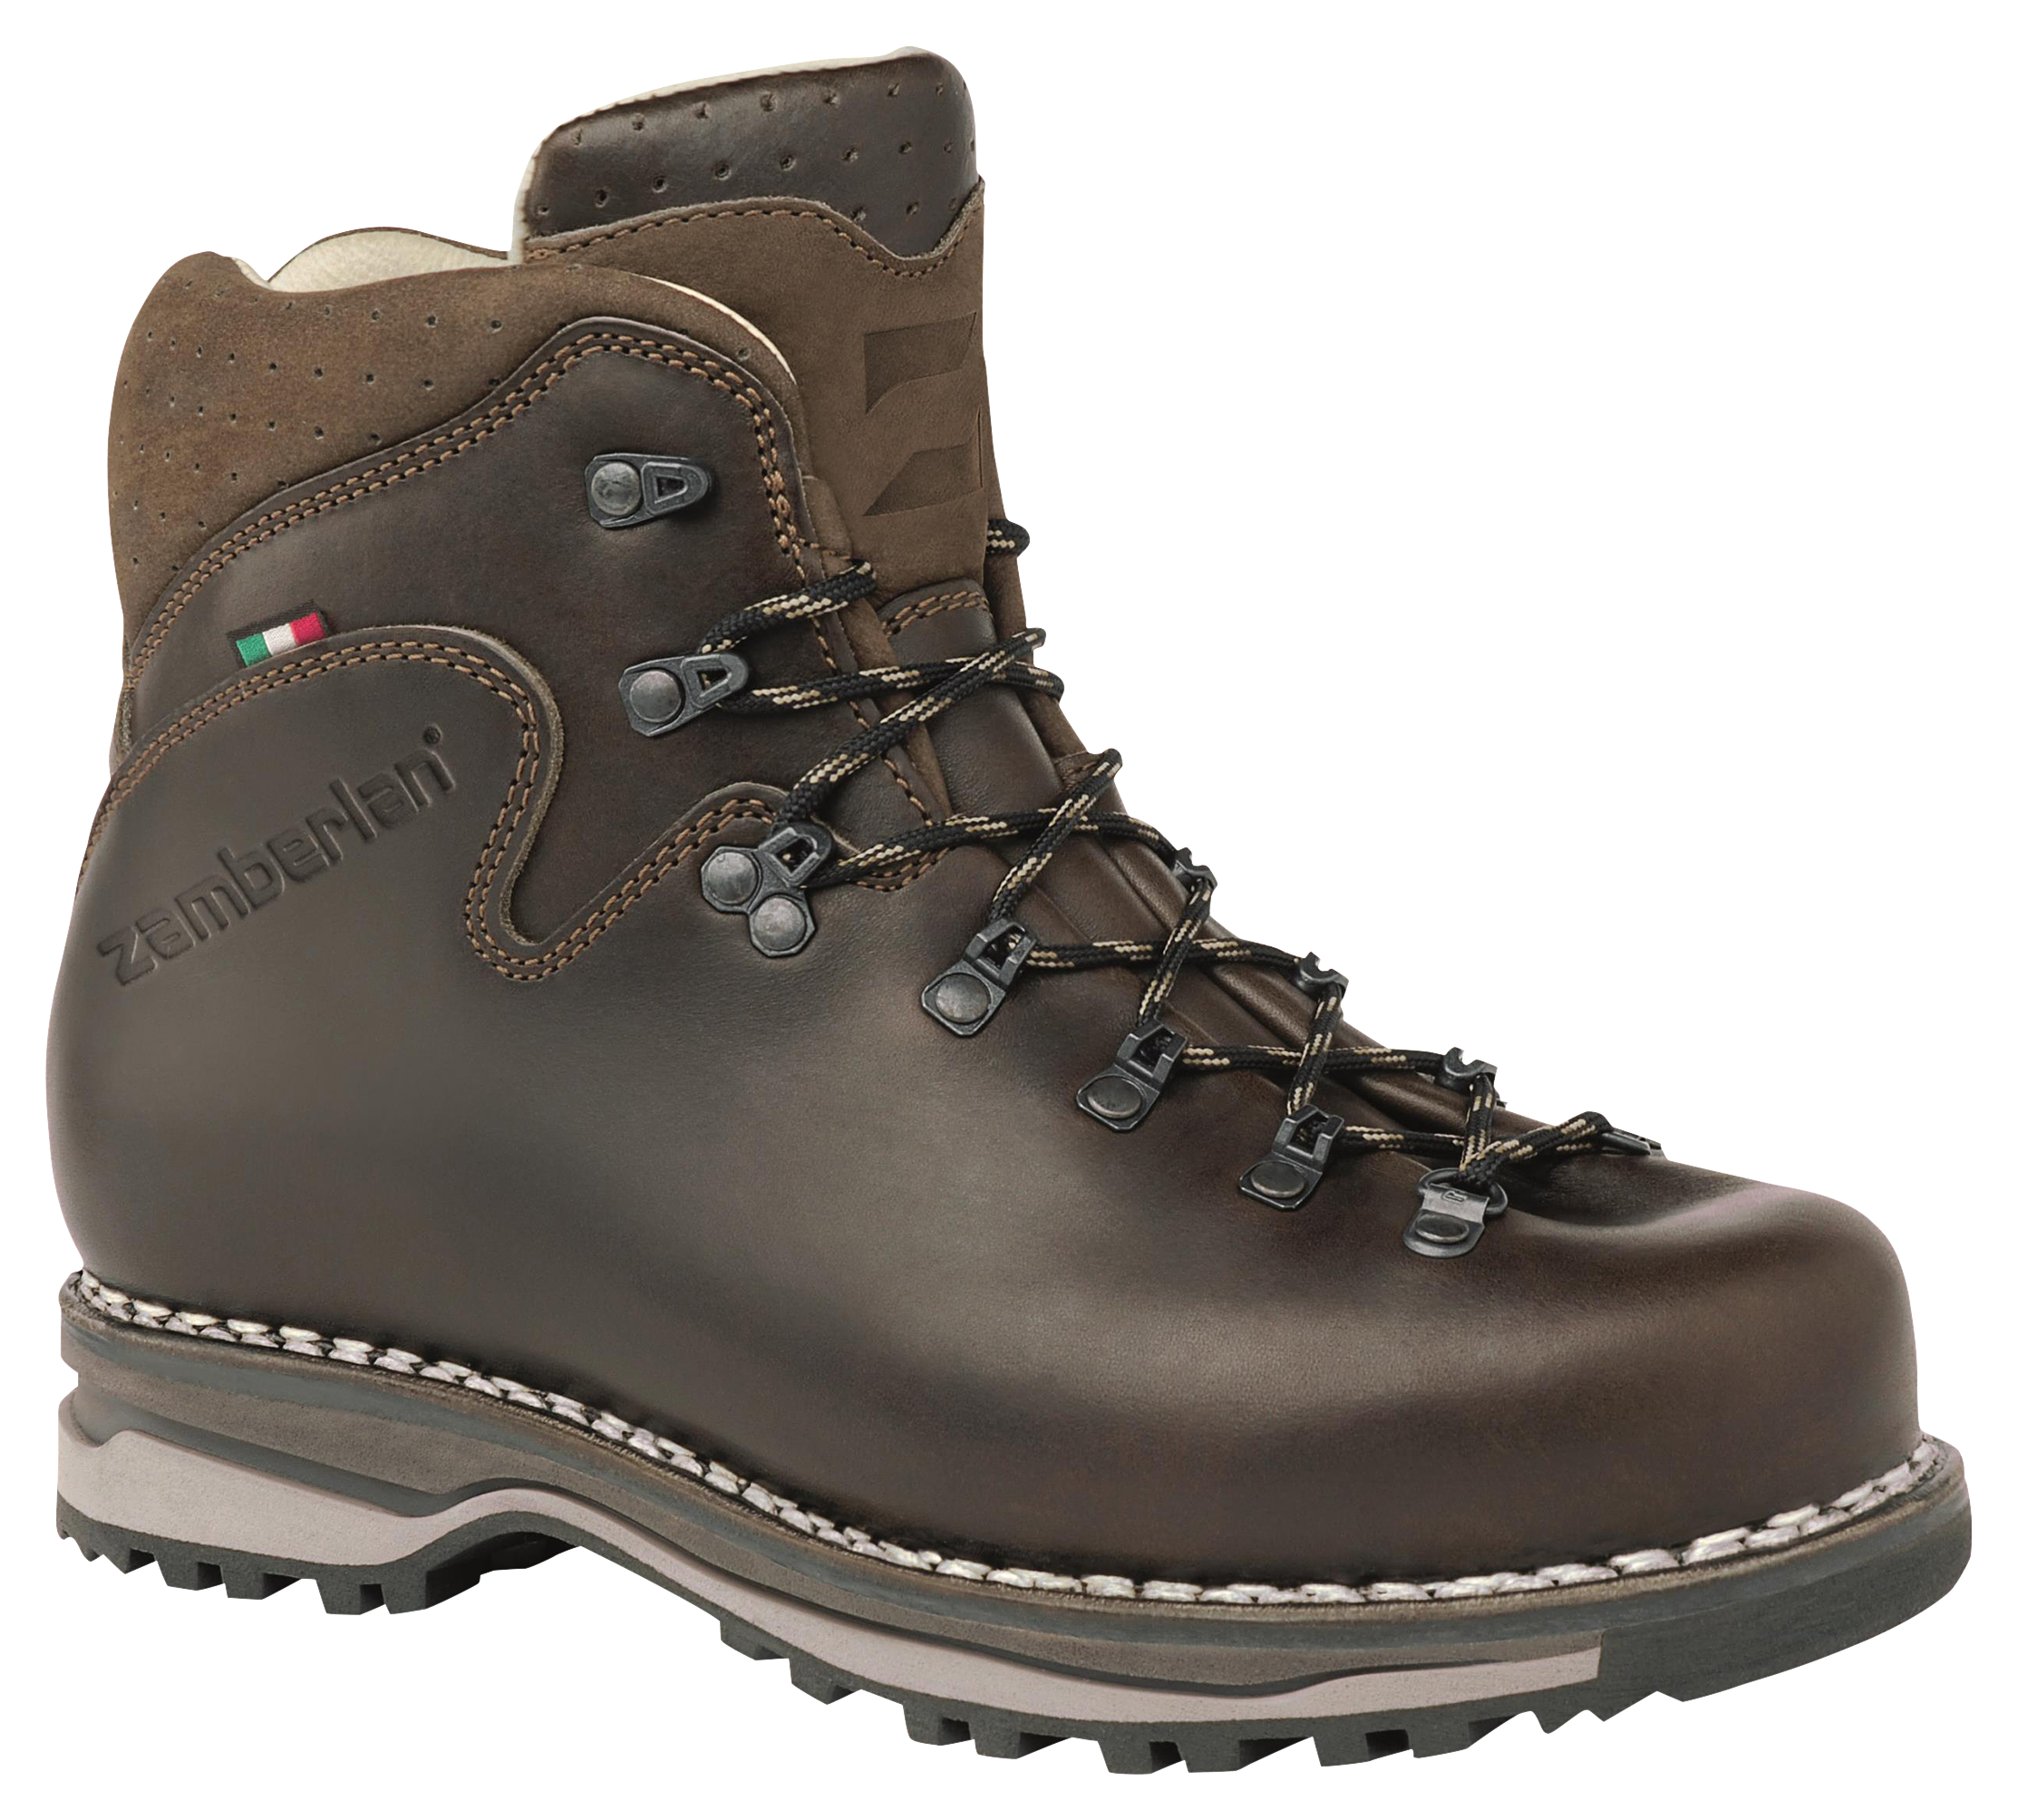 Zamberlan Latemar NW Hiking Boots for Men - Waxed Dark Brown - 9M